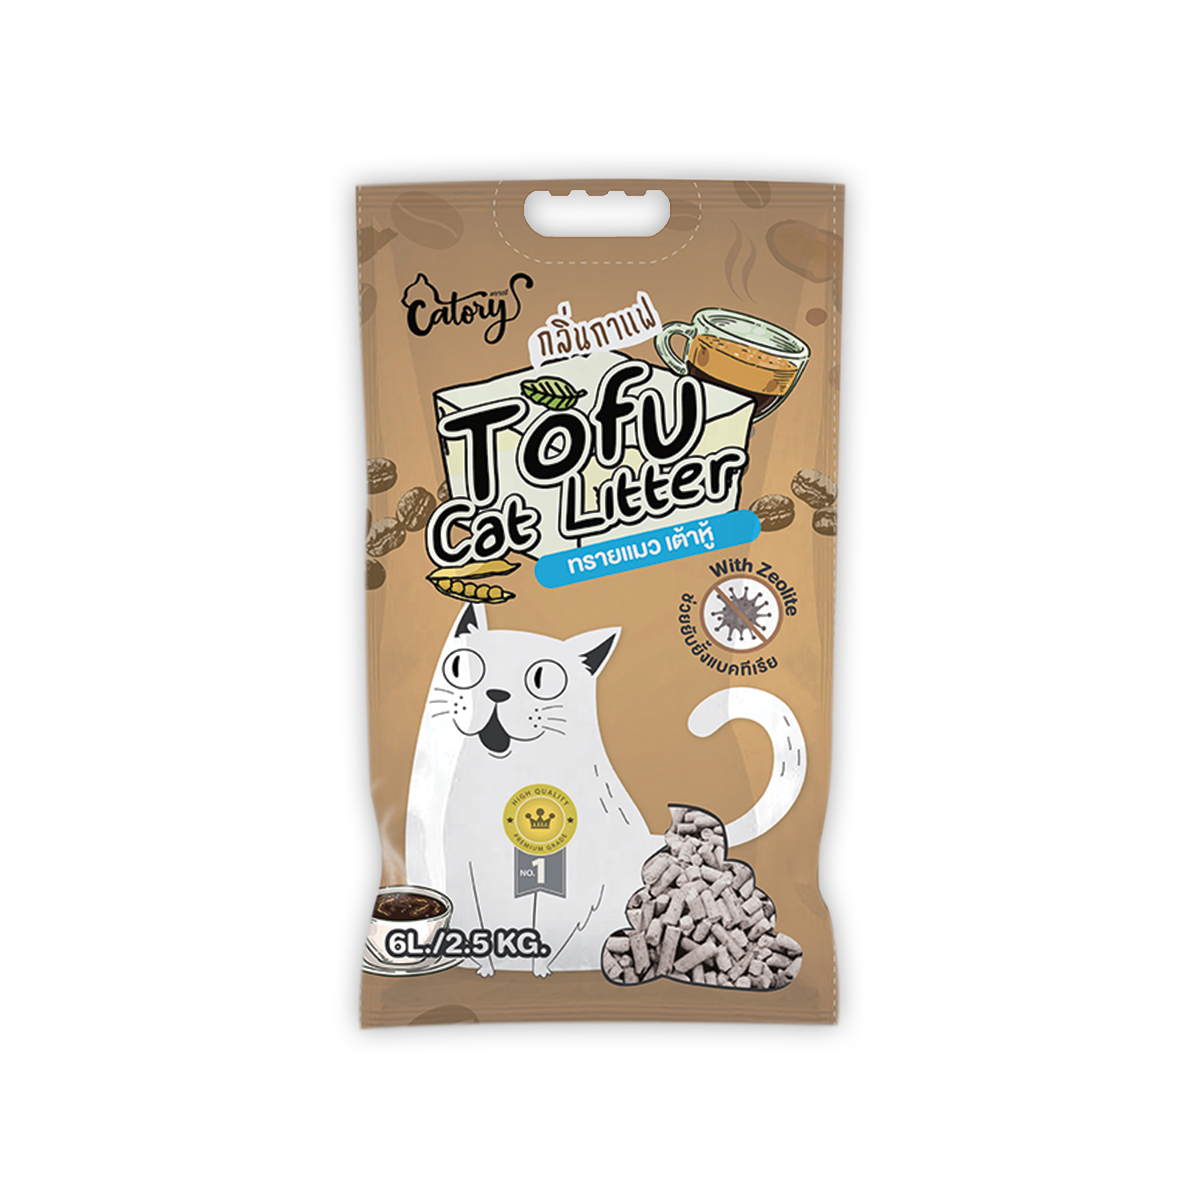 Catory Tofu Cat Litter with Zeolite แคทอรี่ ทรายเต้าหู้ธรรมชาติ กลิ่นกาแฟ ขนาด 6 ลิตร